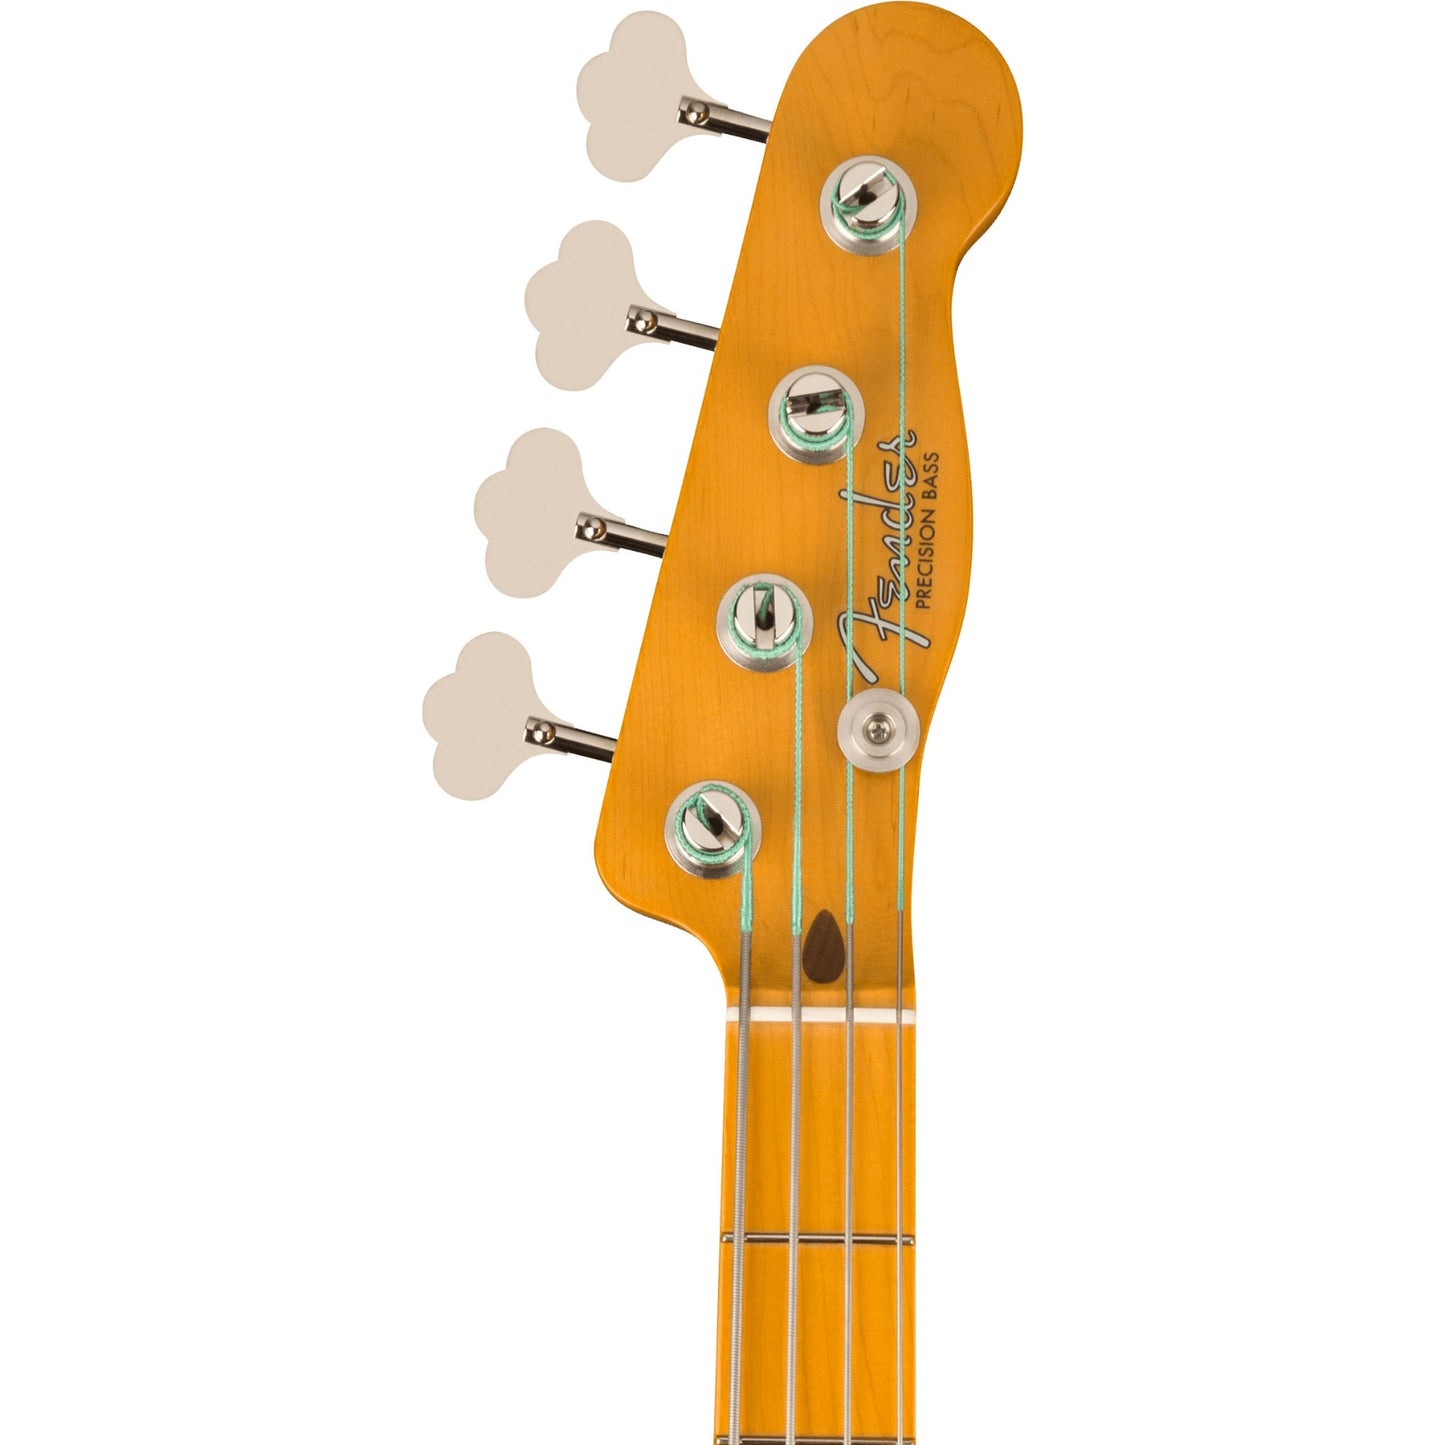 Fender American Vintage II 1954 4-String Precision Bass in Vintage Blonde